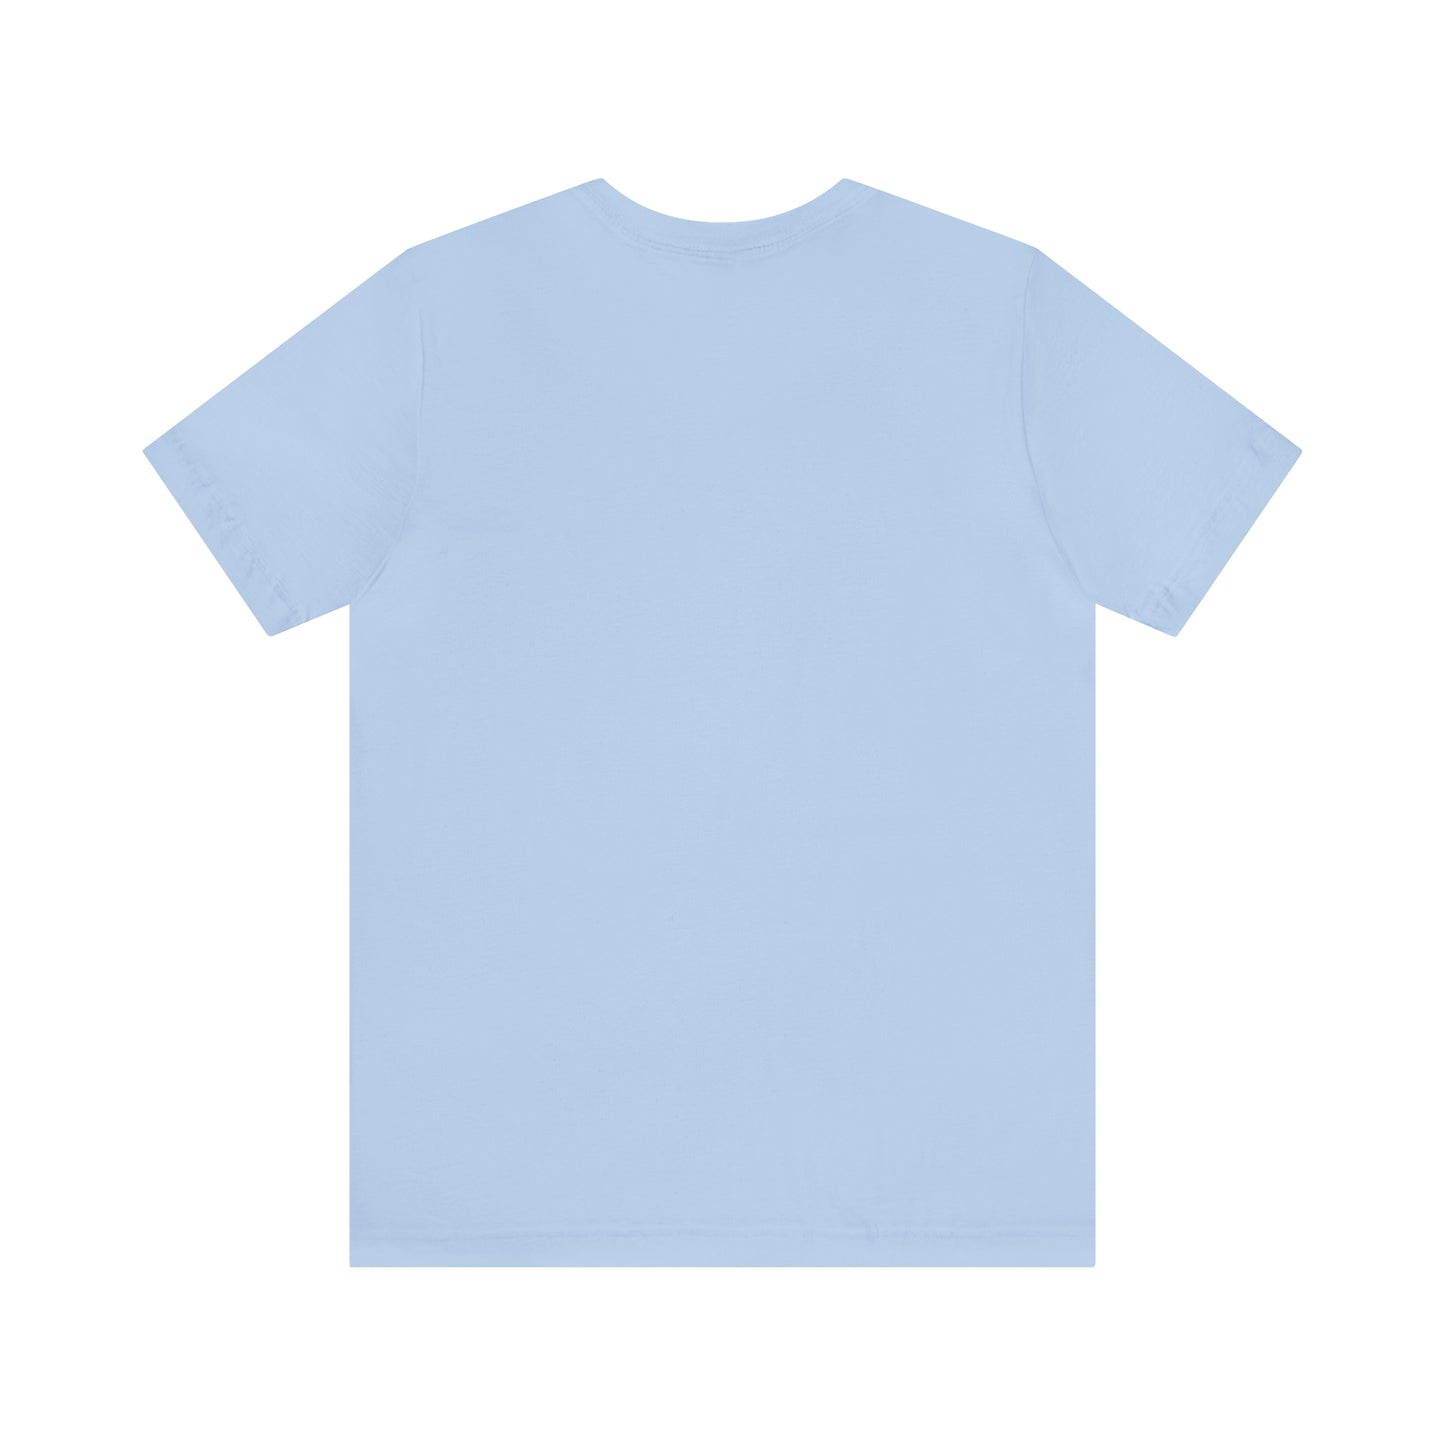 Comfy Short Sleeve T-Shirt: South Africa